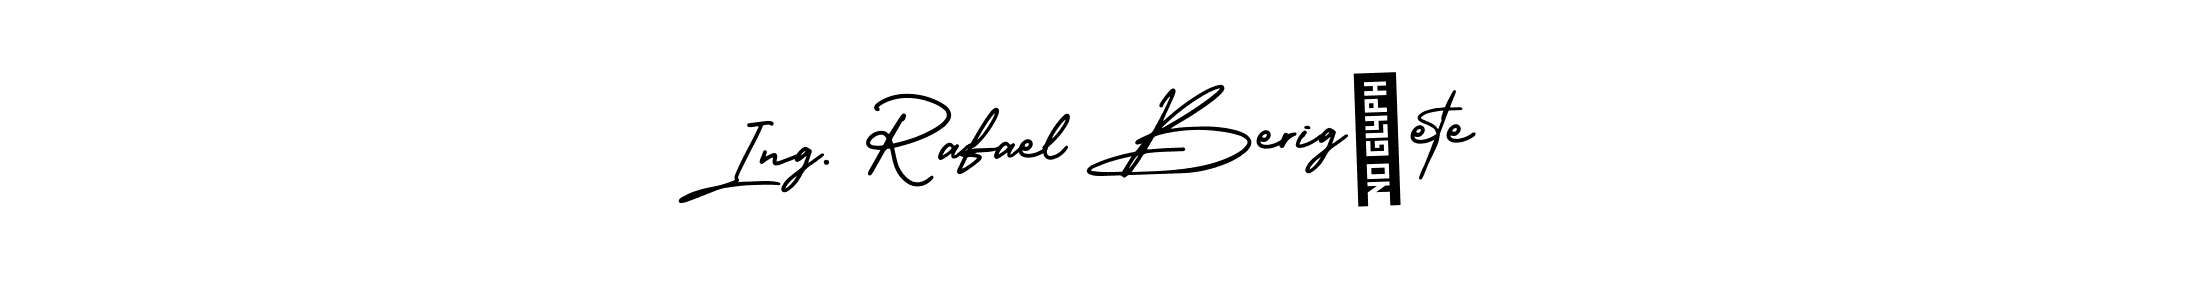 Best and Professional Signature Style for Ing. Rafael Berigüete. AmerikaSignatureDemo-Regular Best Signature Style Collection. Ing. Rafael Berigüete signature style 3 images and pictures png